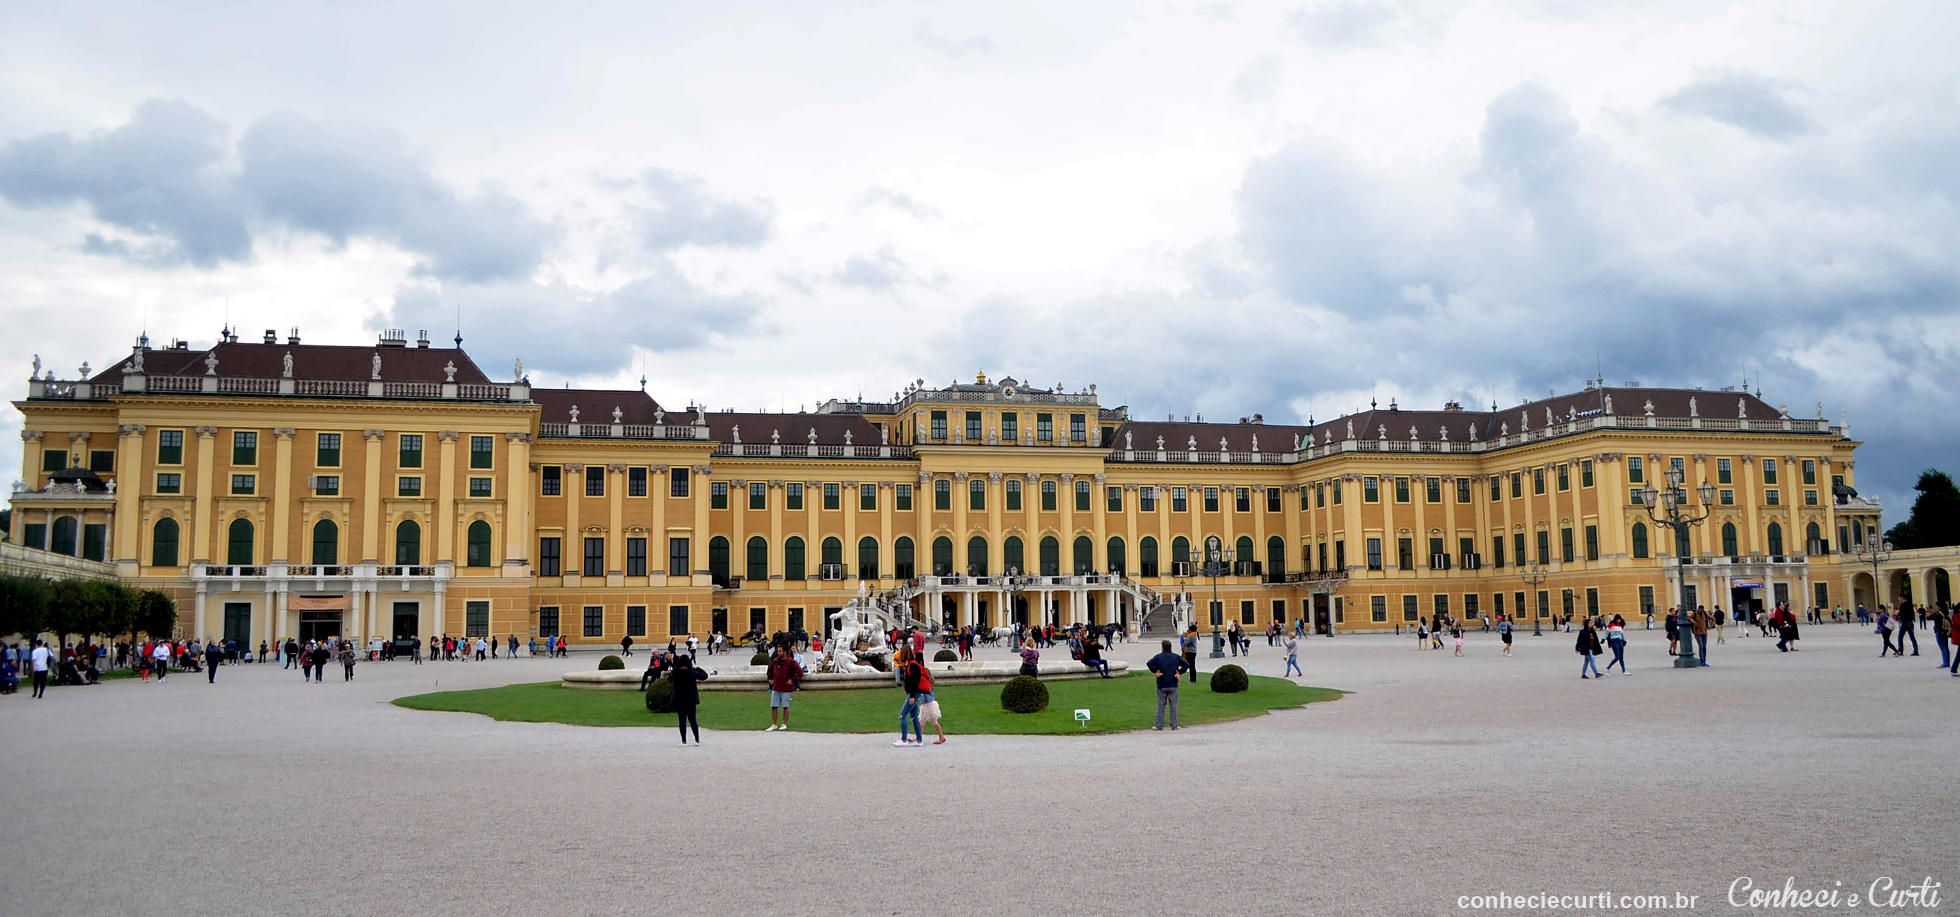 Visita ao Palácio de Schönbrunn em Viena